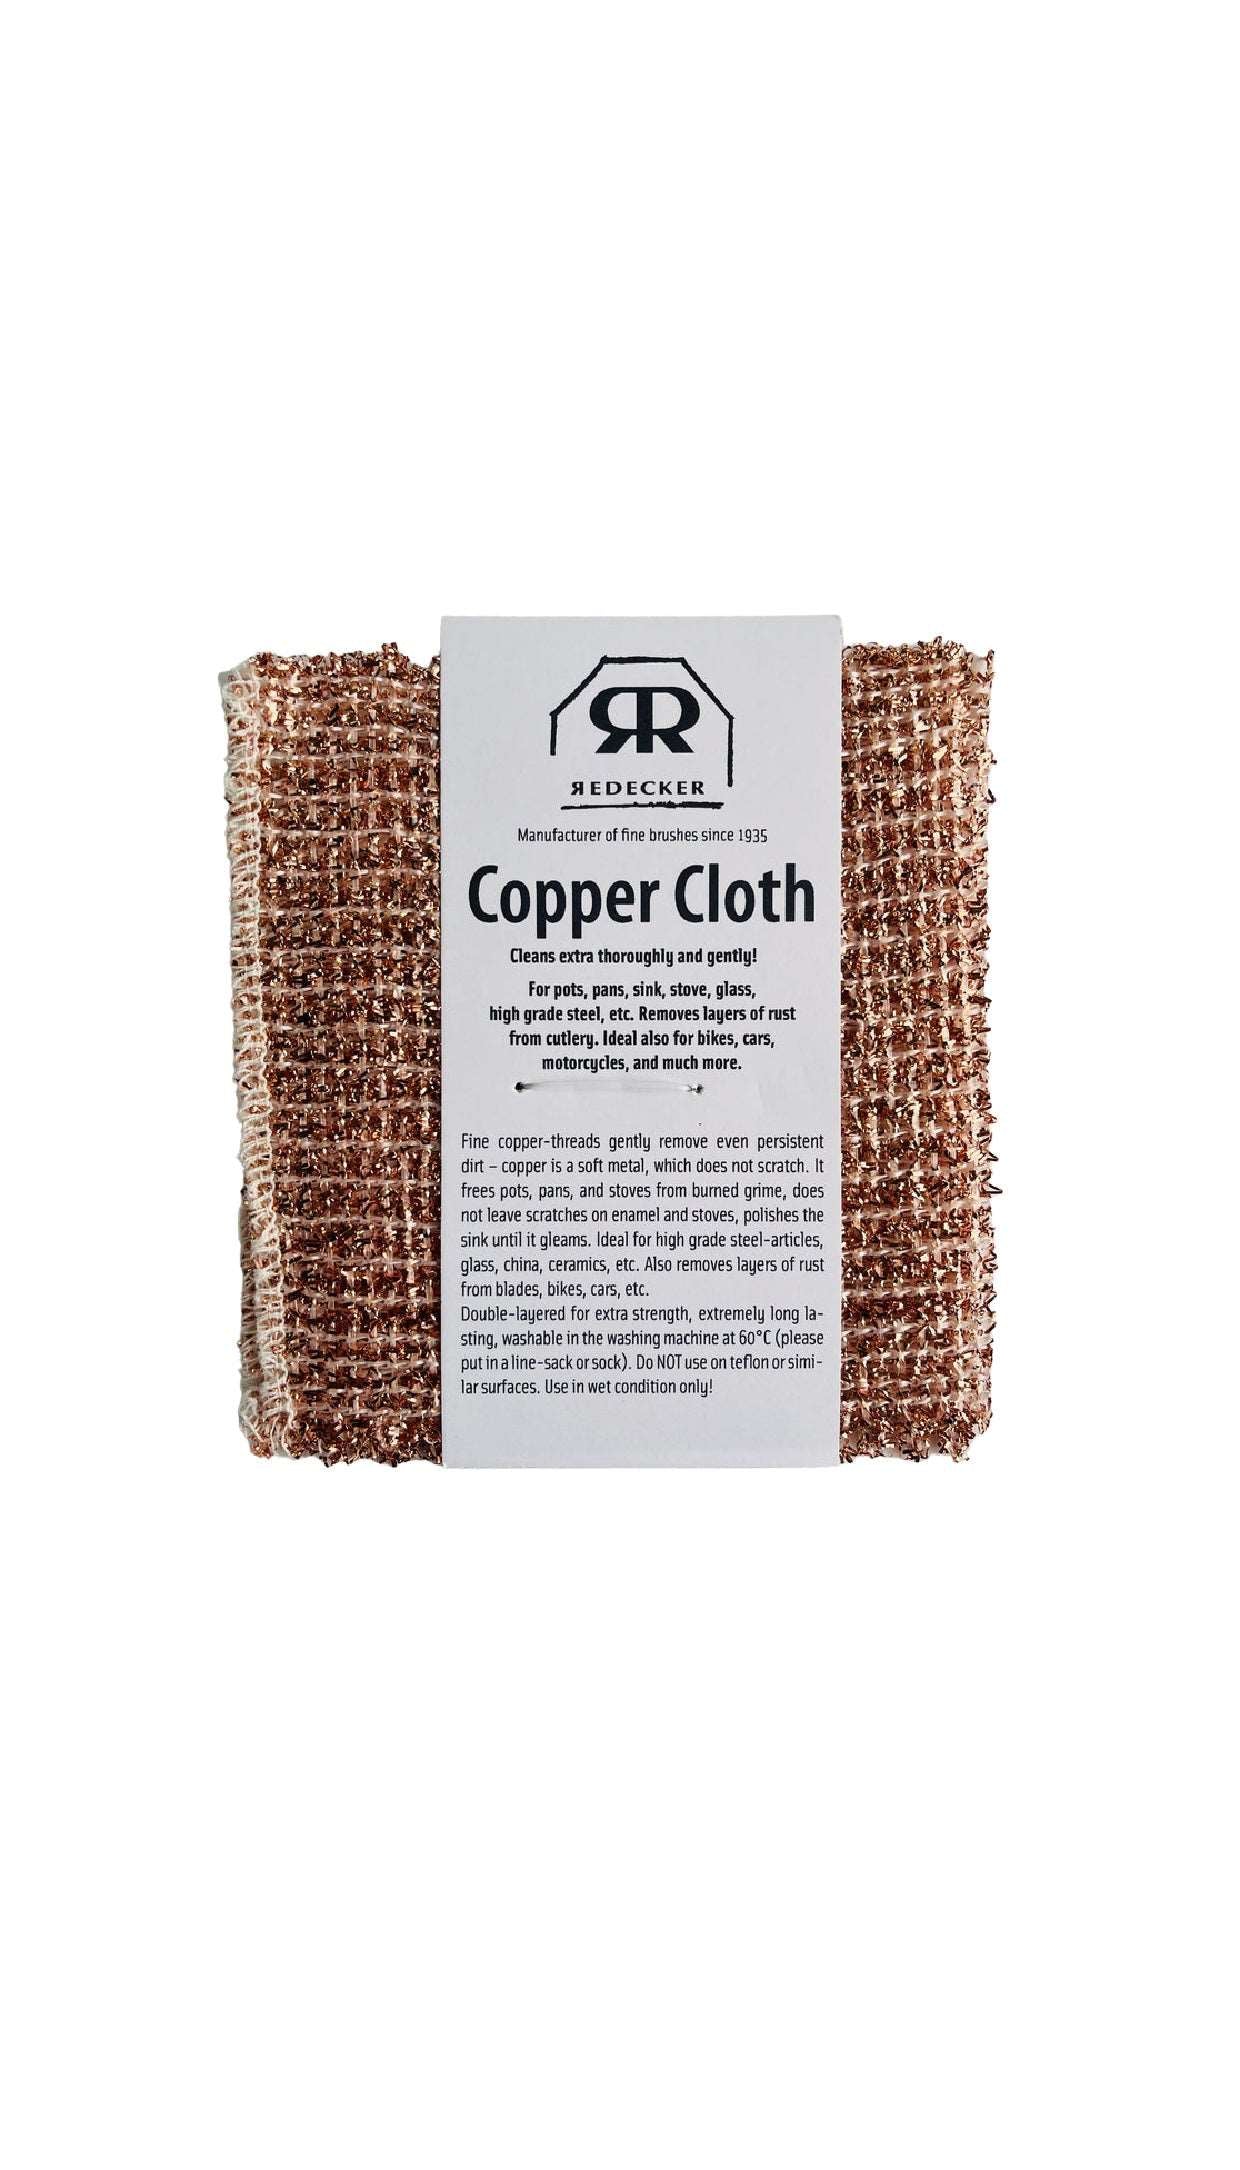 Copper Cloth / REDECKER